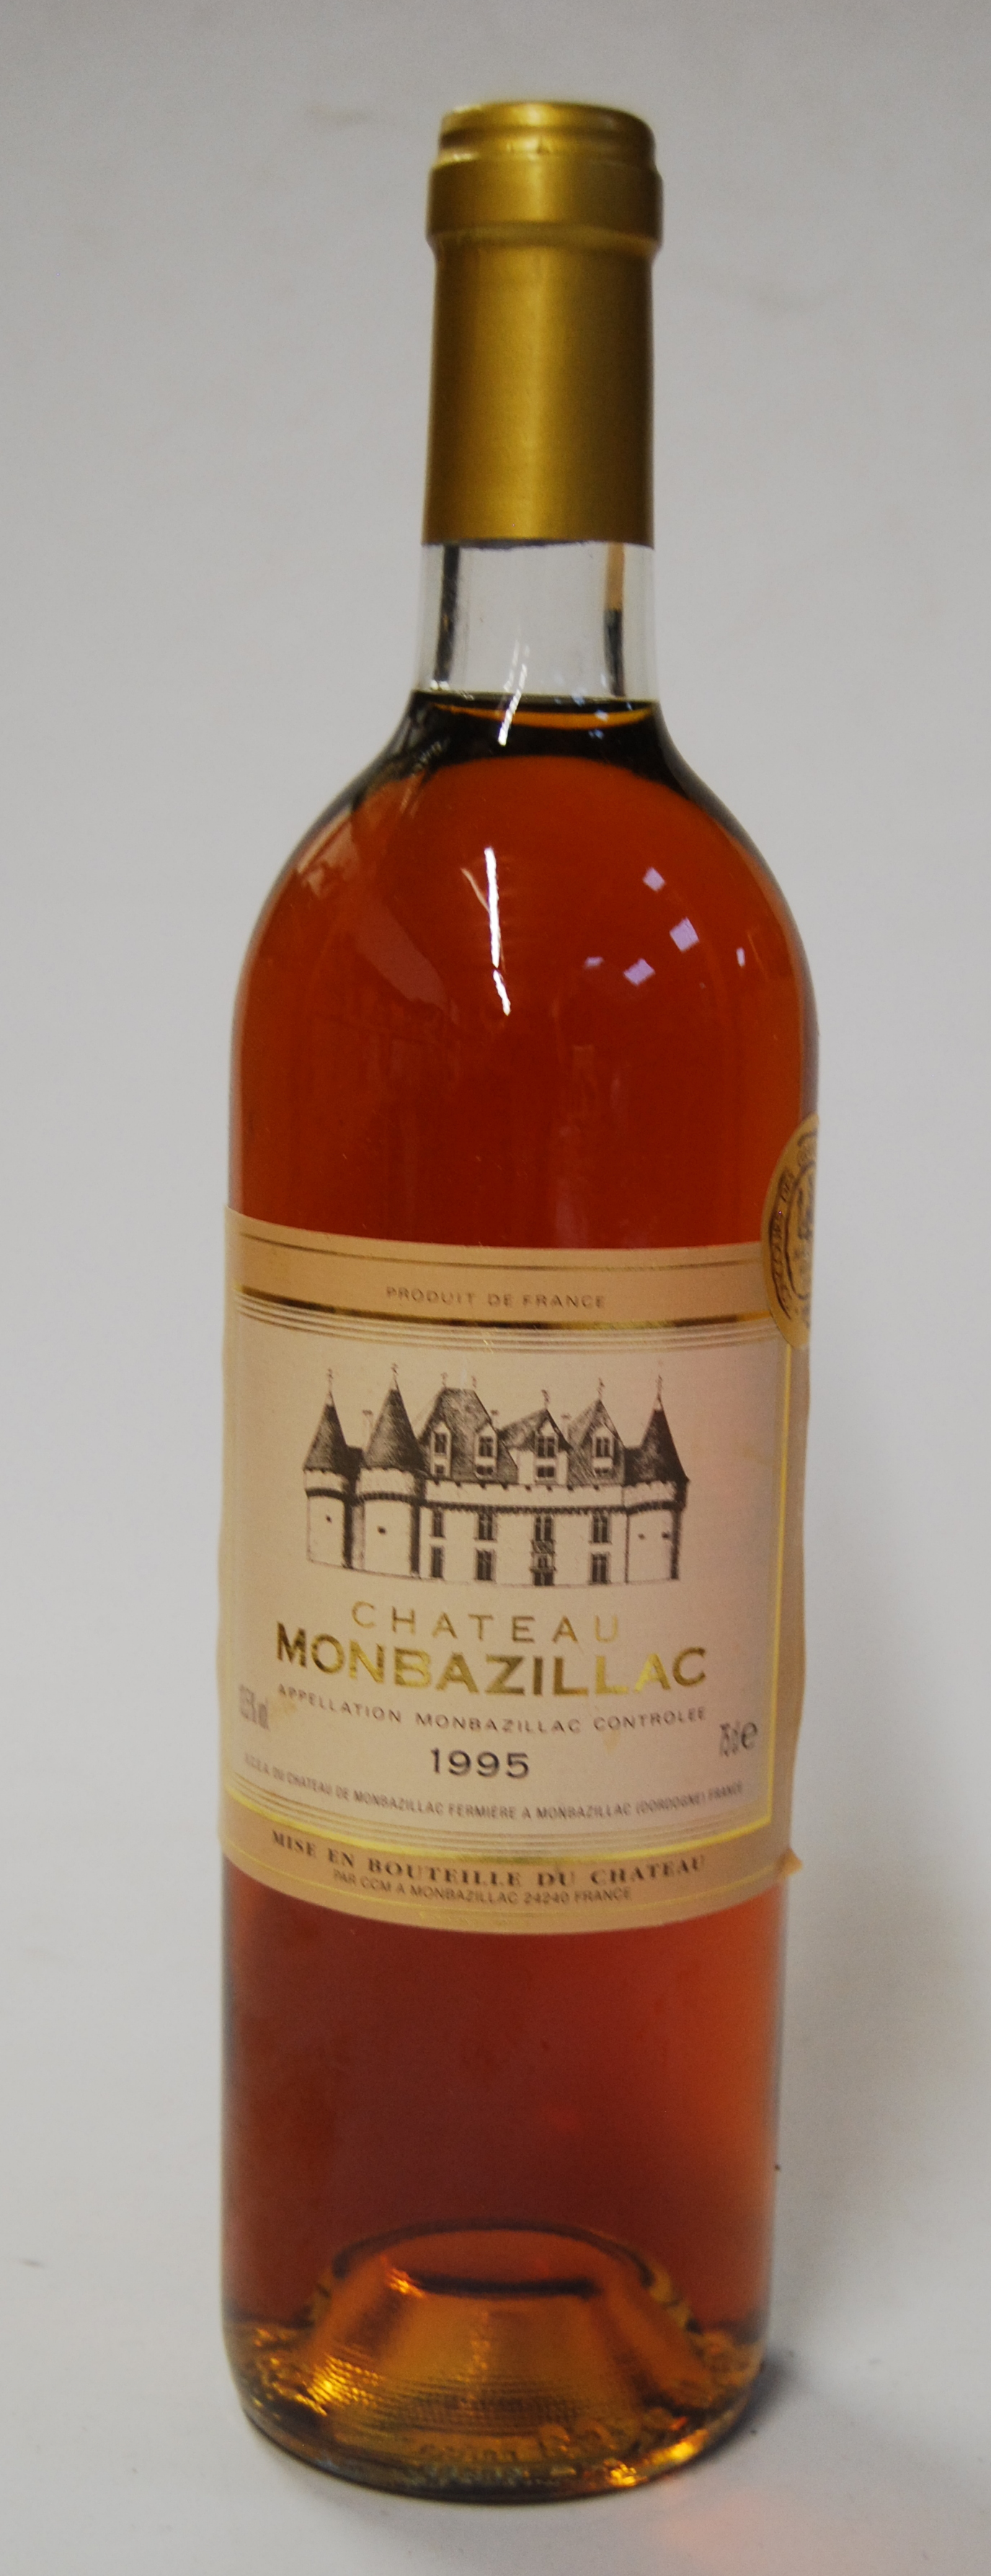 Château Monbazillac, 1995, Monbazillac, three bottles in gift pack carton